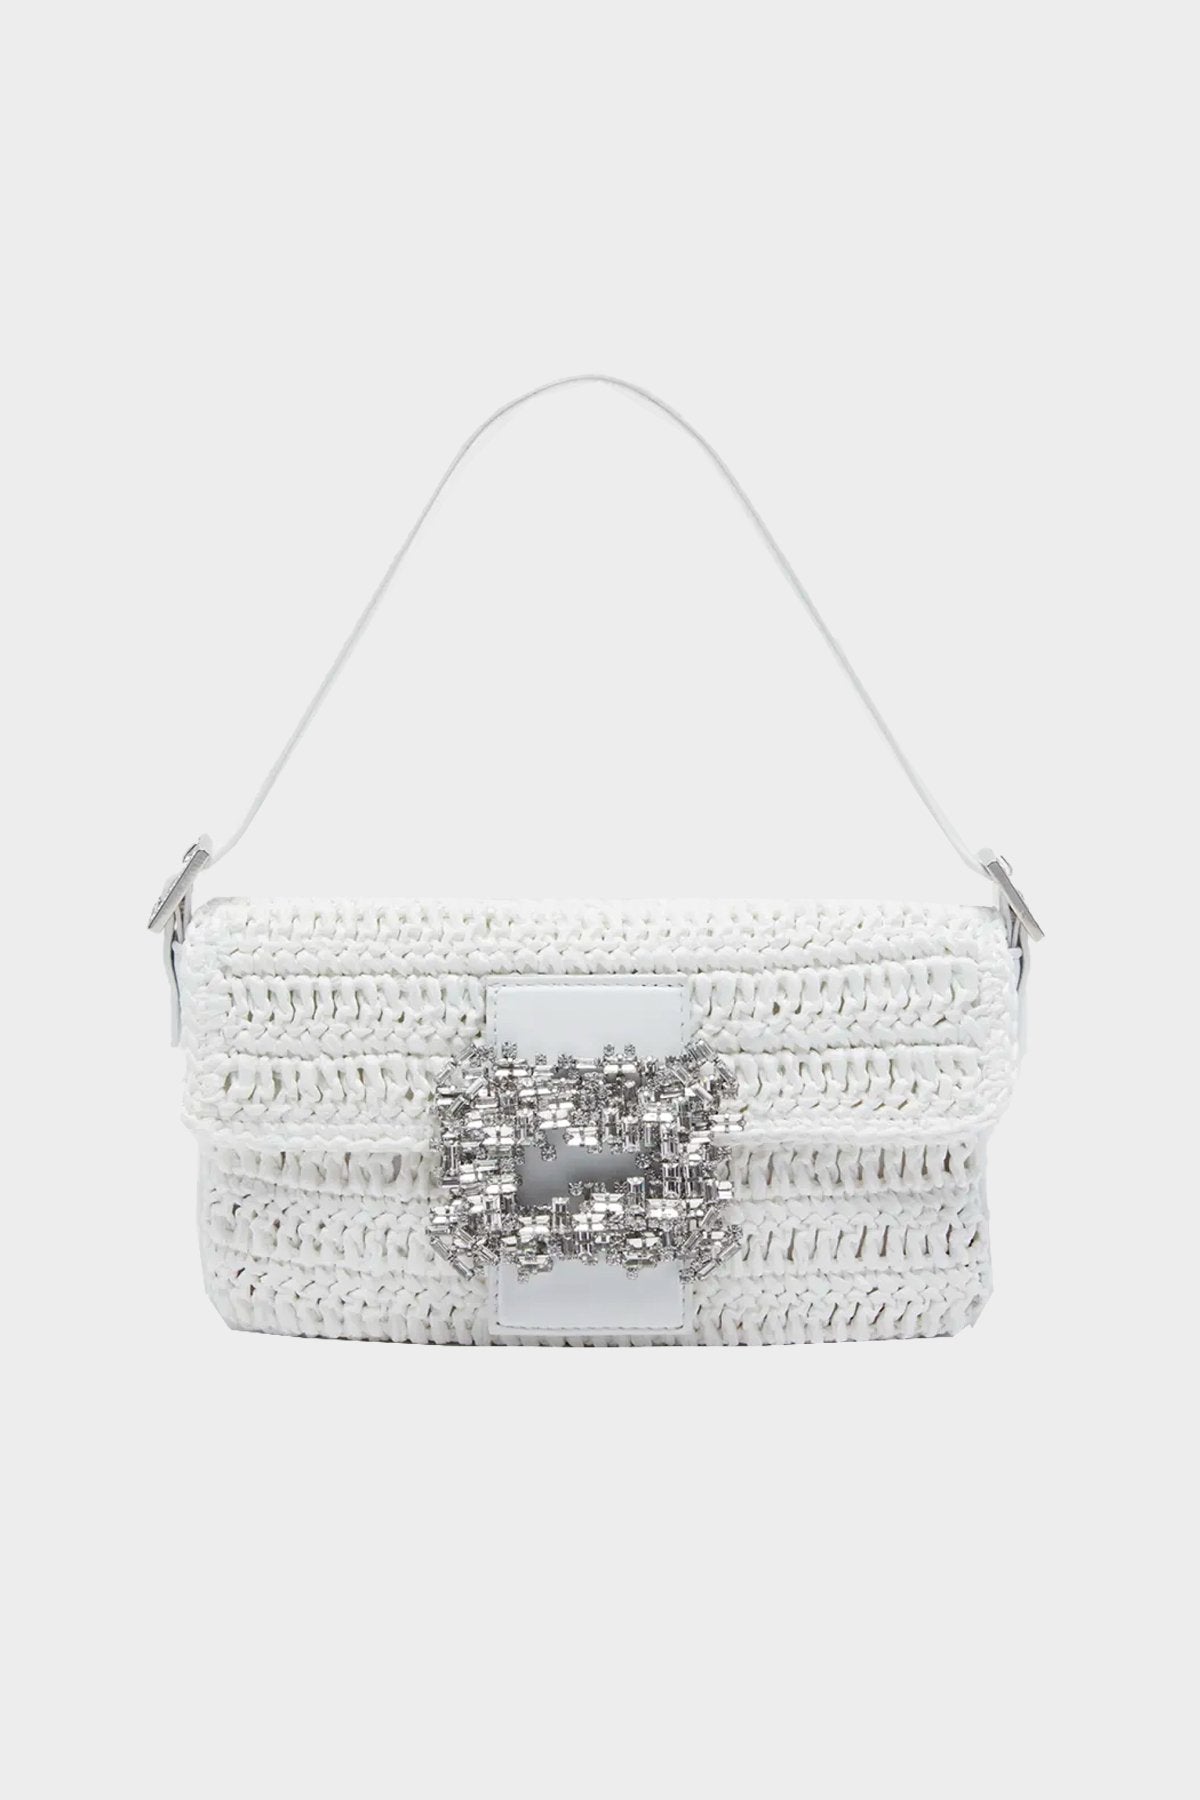 Habibi Crochet Bag in White - shop-olivia.com